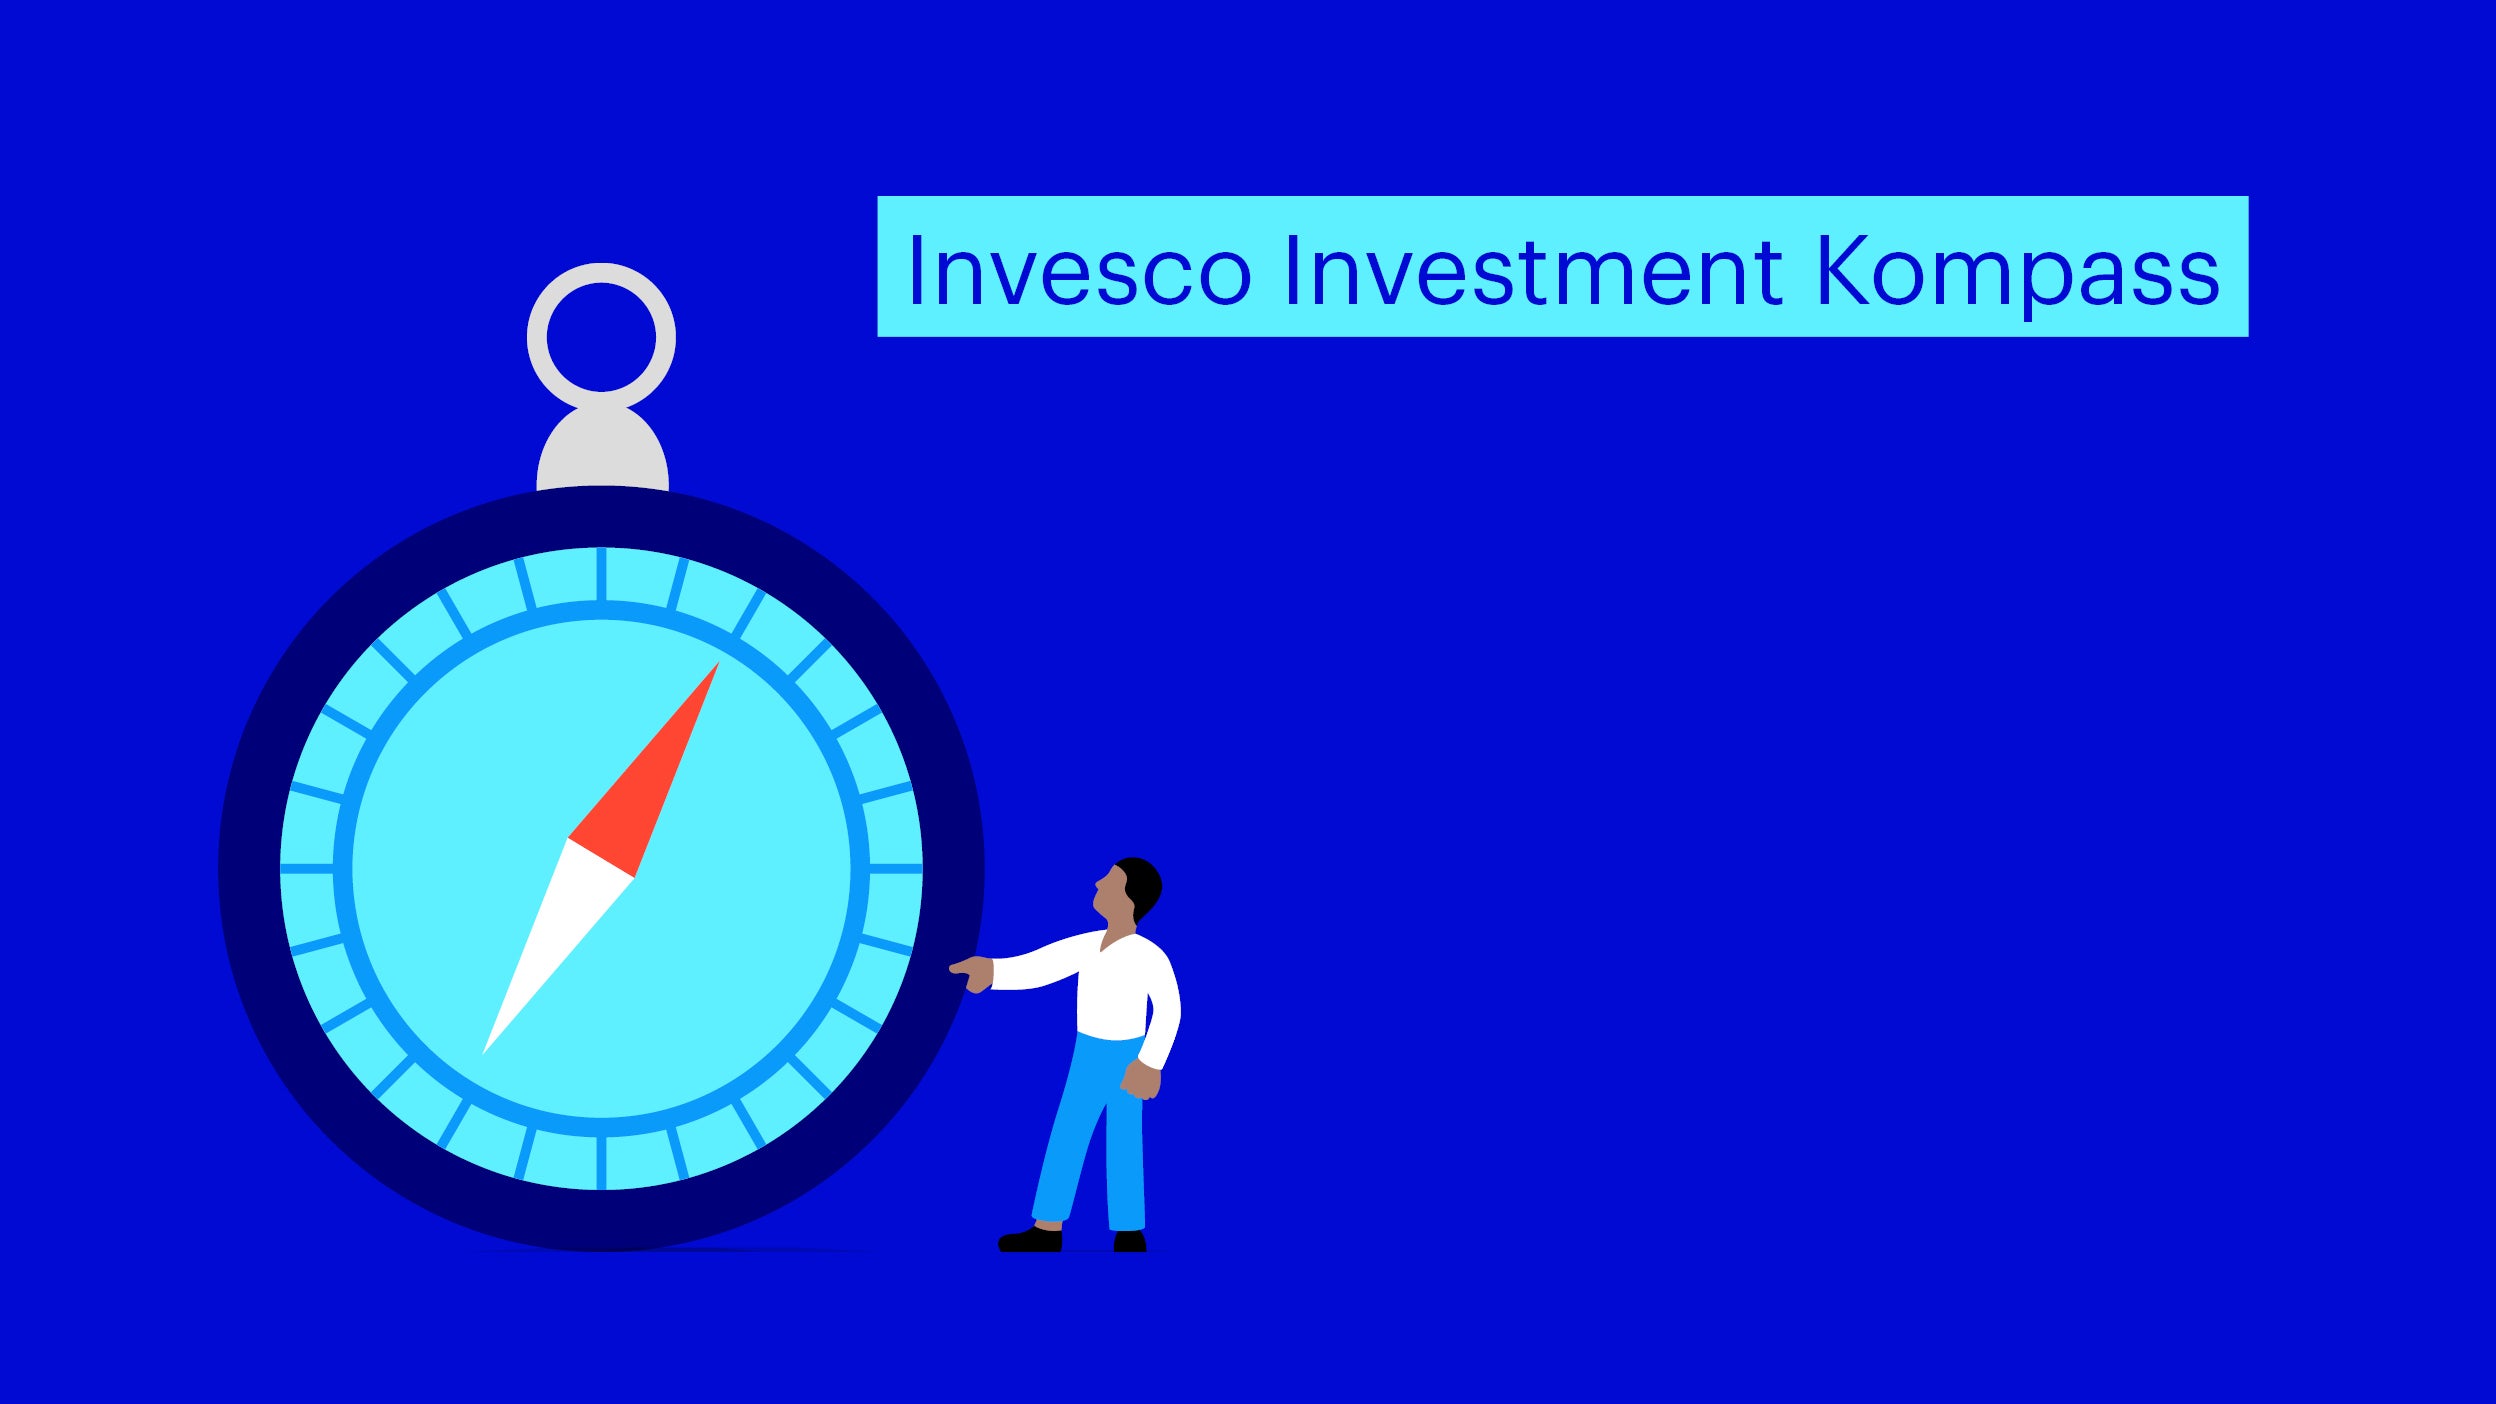 Invesco Investment Kompass